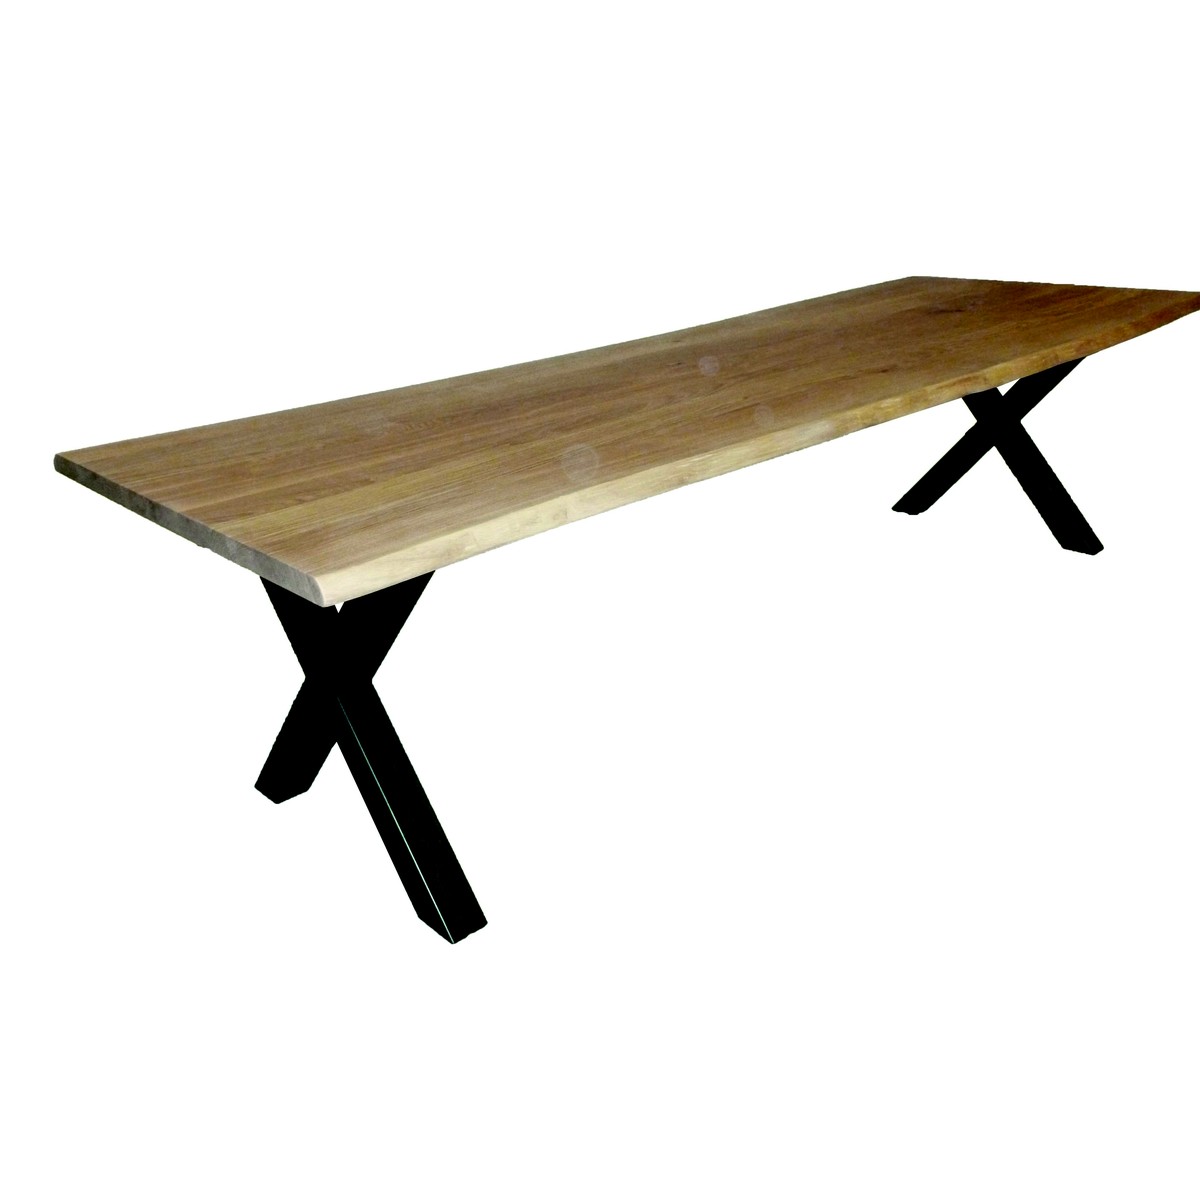   Table haute Enzo Trunk rectangulaire  160x100x90cm